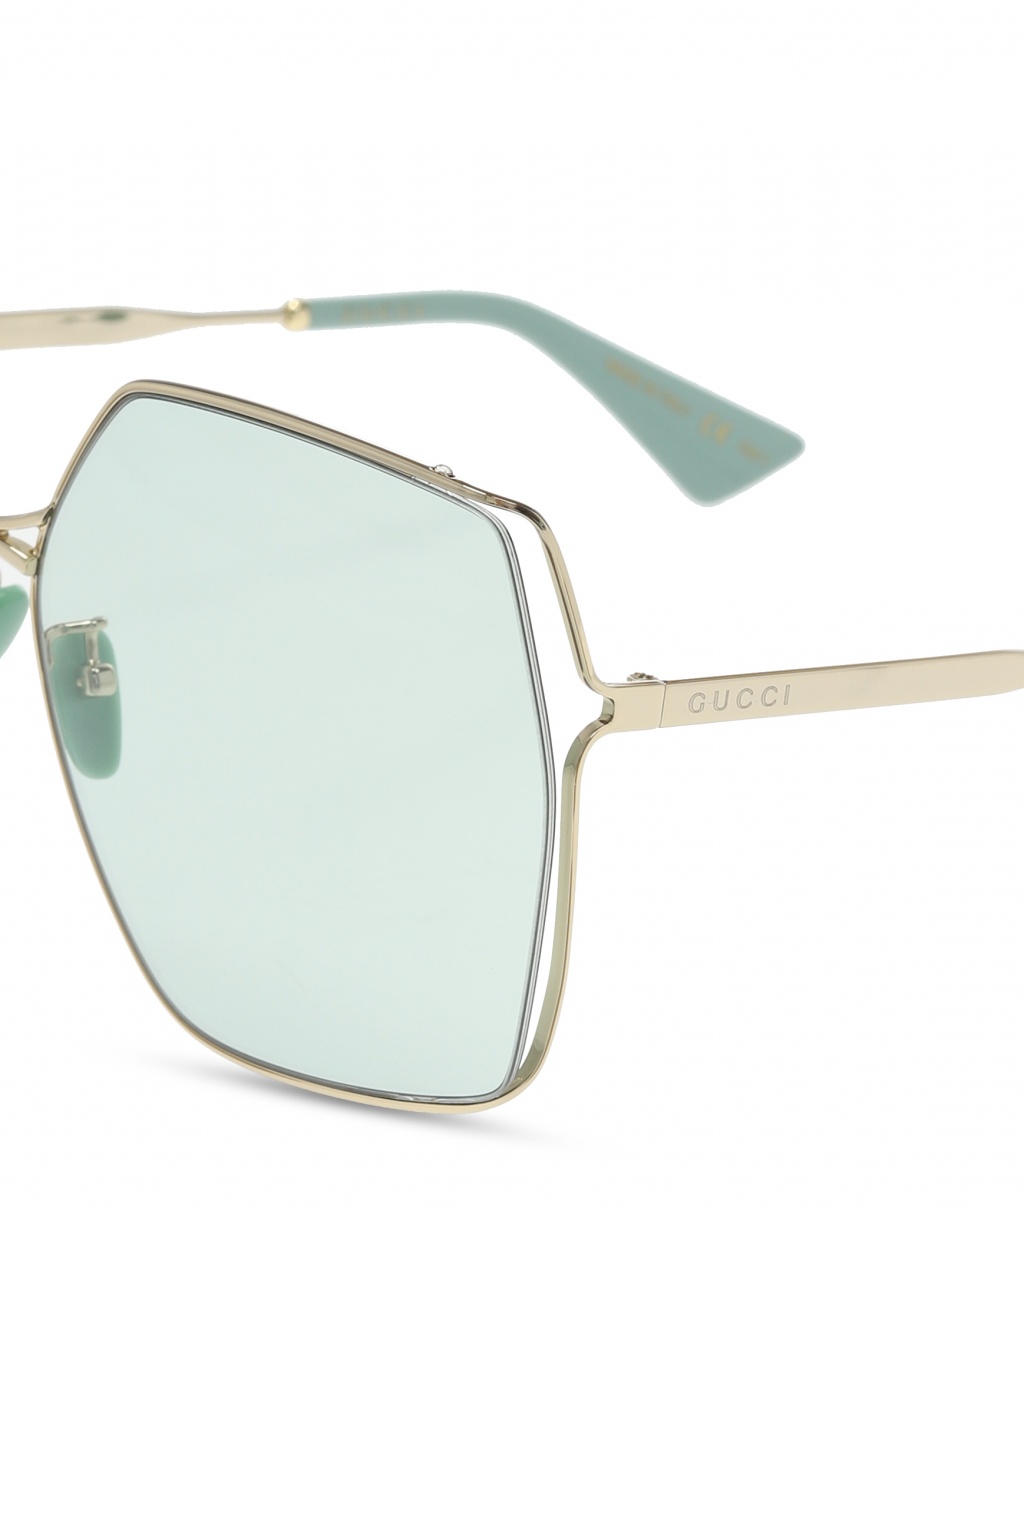 Gucci sunglasses mccartney with logo